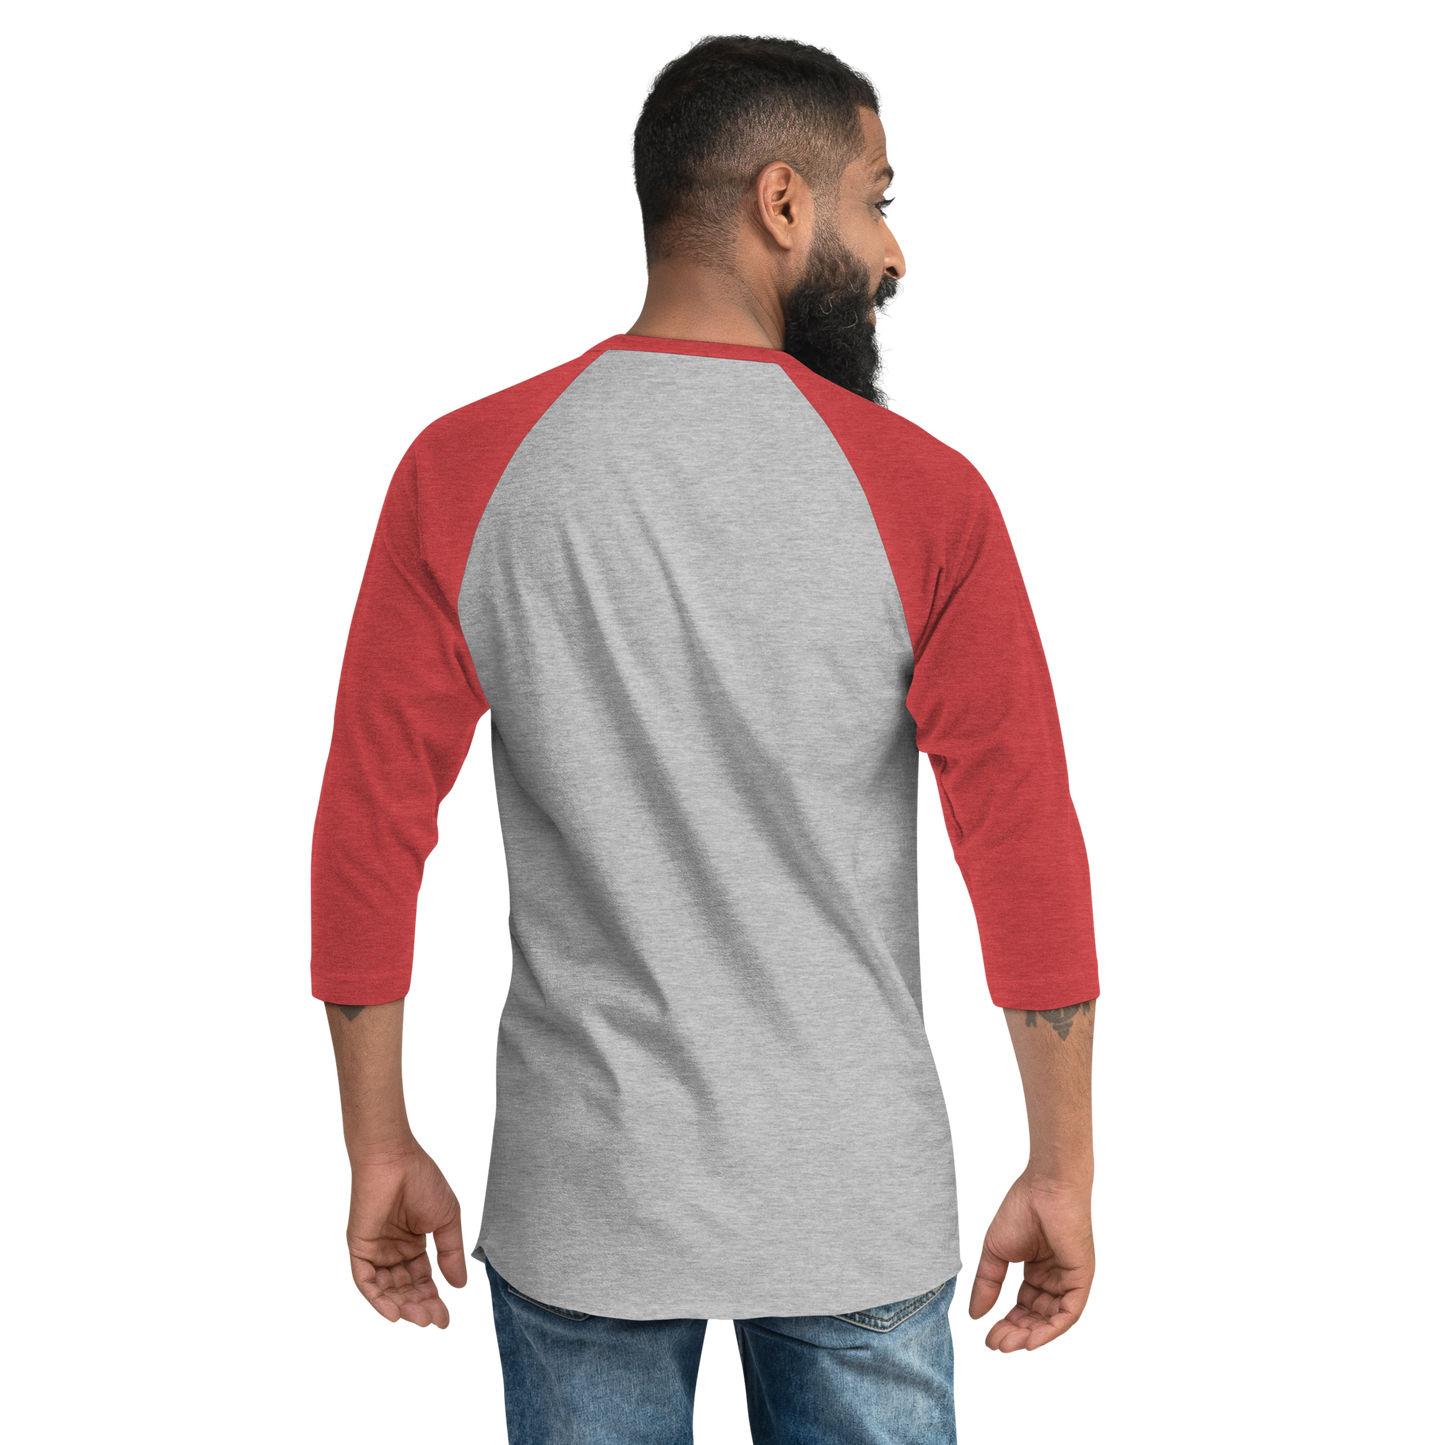 unisex 3/4 sleeve raglan shirt heather grey and heather red back